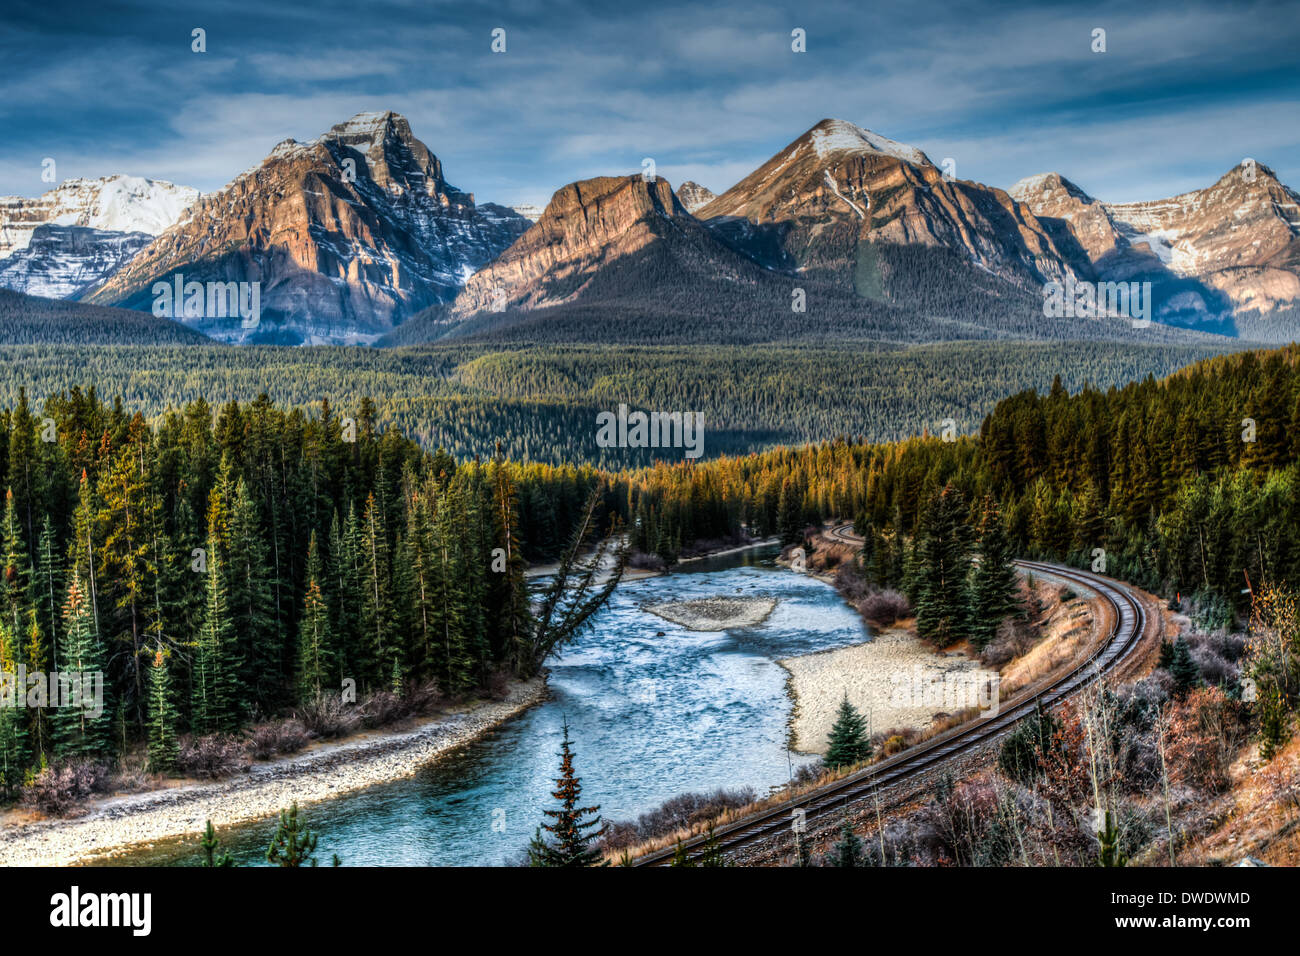 Iconic Morant's Curve, Banff National Park, Alberta Canada Stock Photo